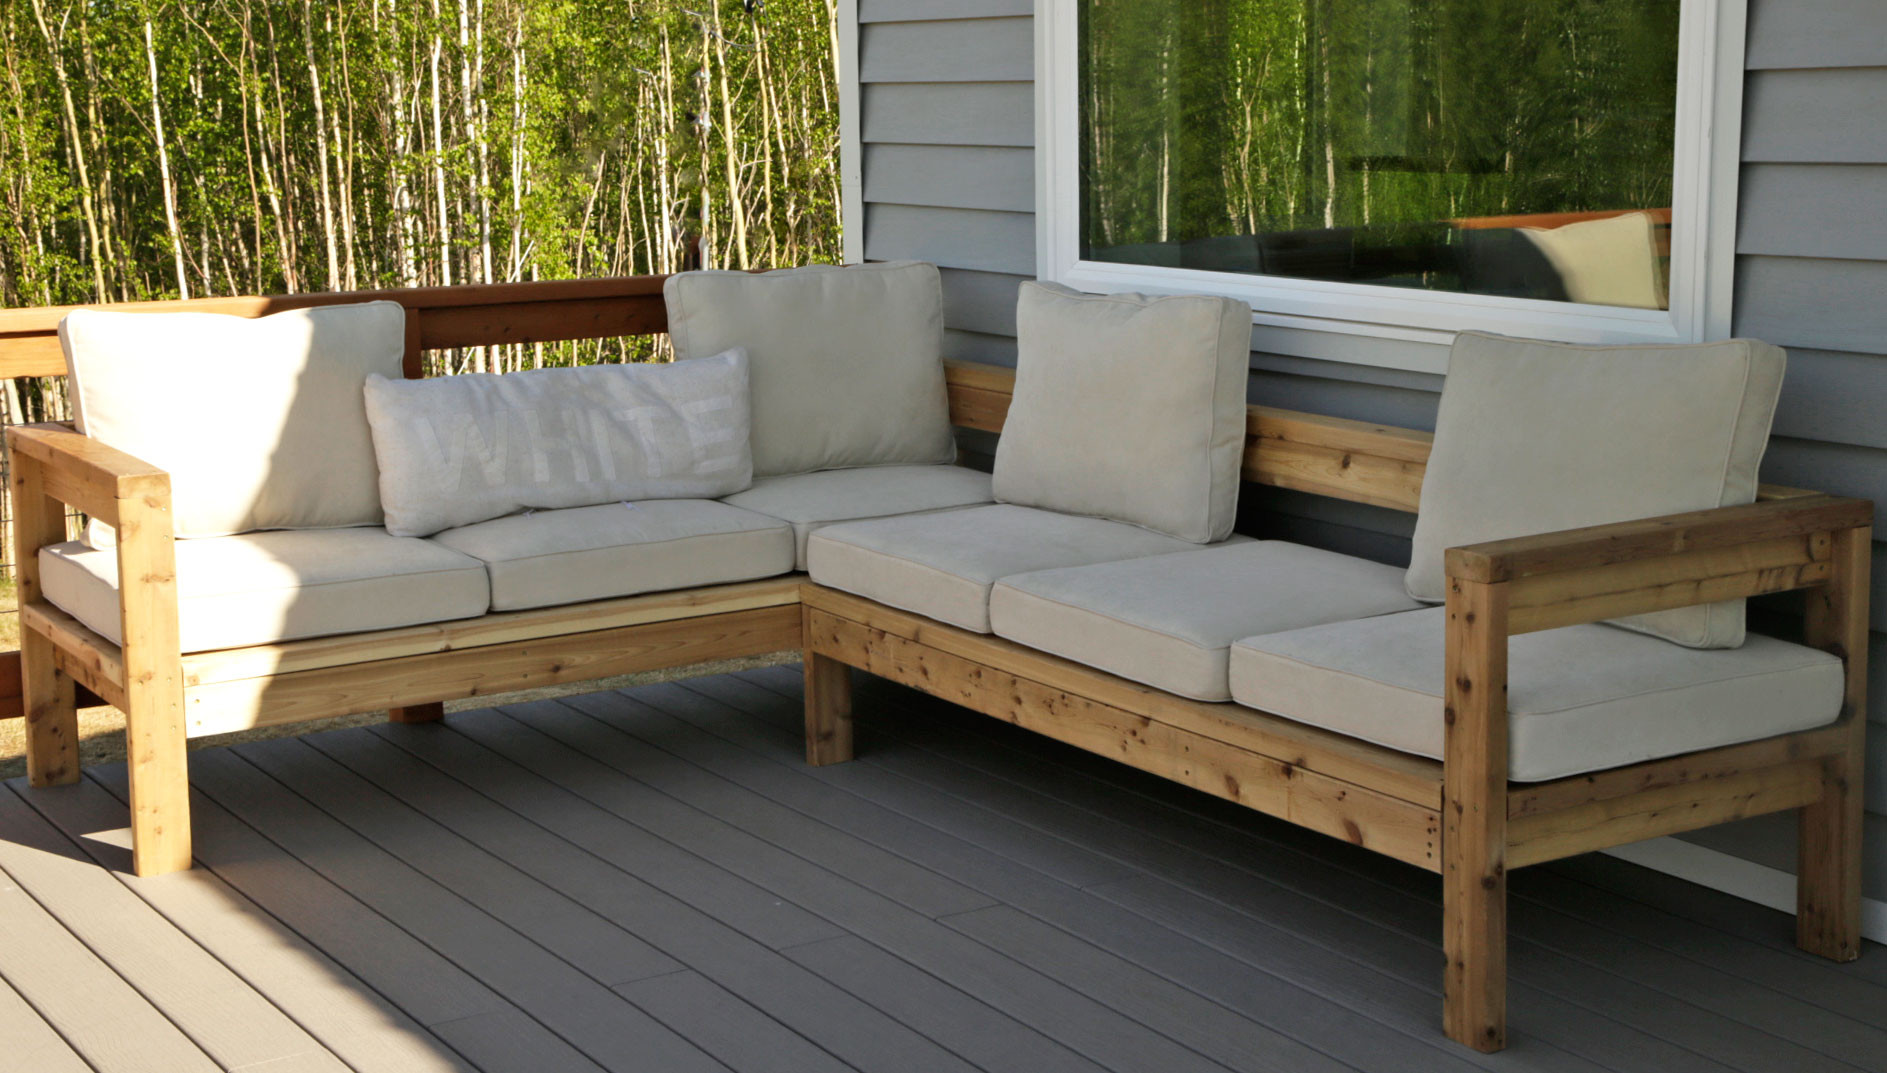 DIY Outdoor Sectional Plans
 Furniture Inspiring Patio Furniture Design Ideas With Diy